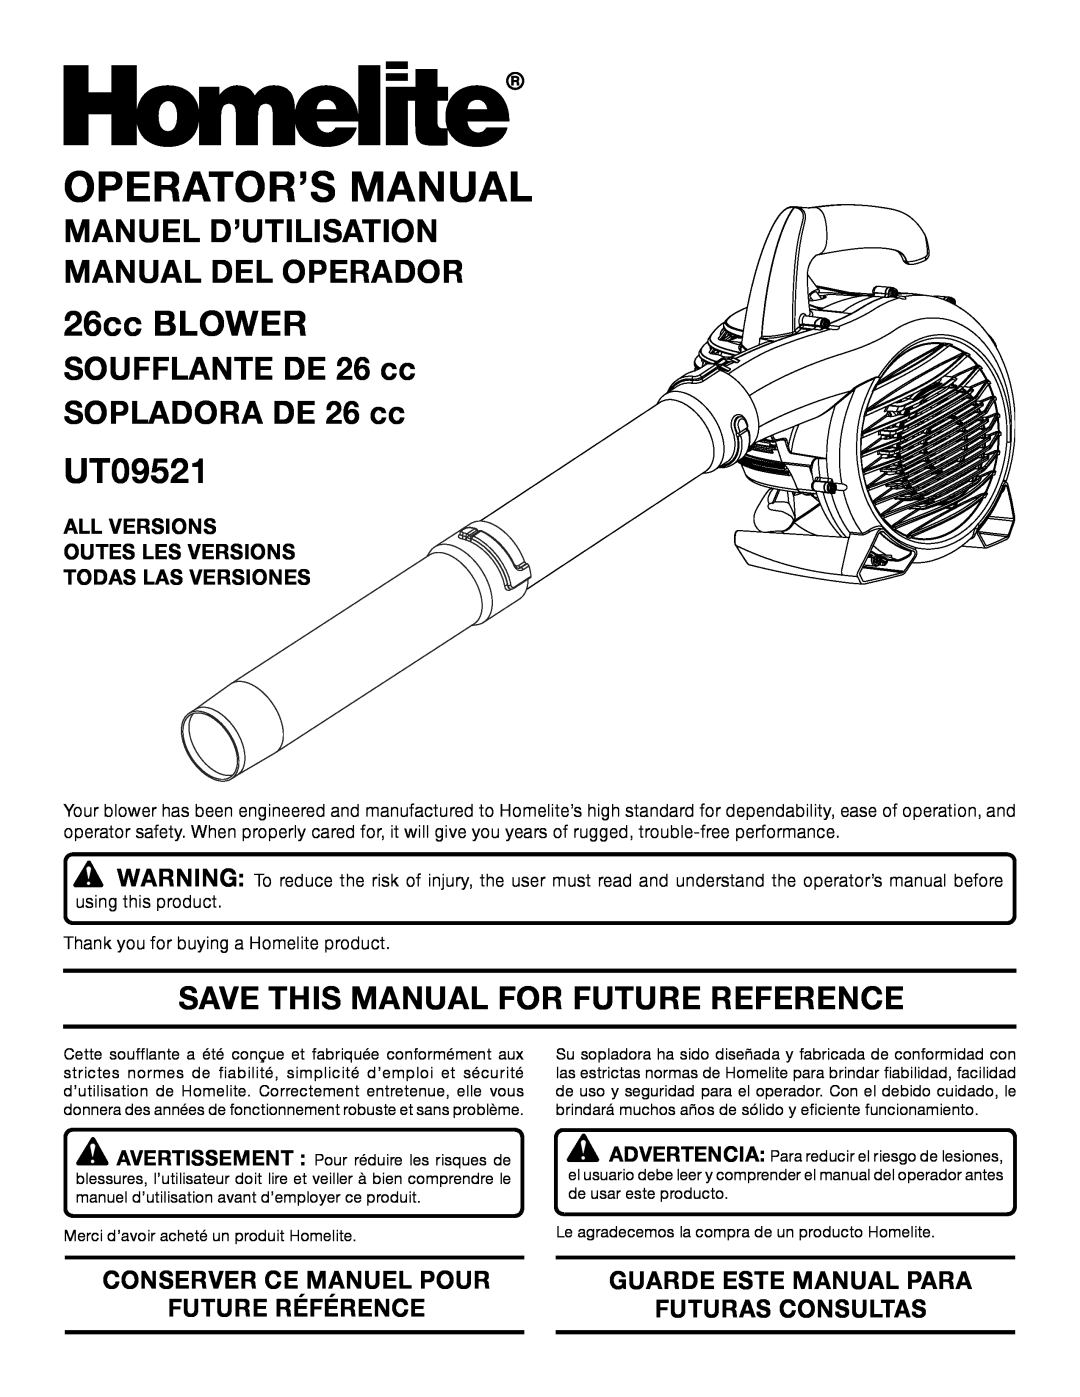 Homelite UT09521 manuel dutilisation 26cc BLOWER, Manuel D’Utilisation Manual Del Operador, Operator’S Manual 